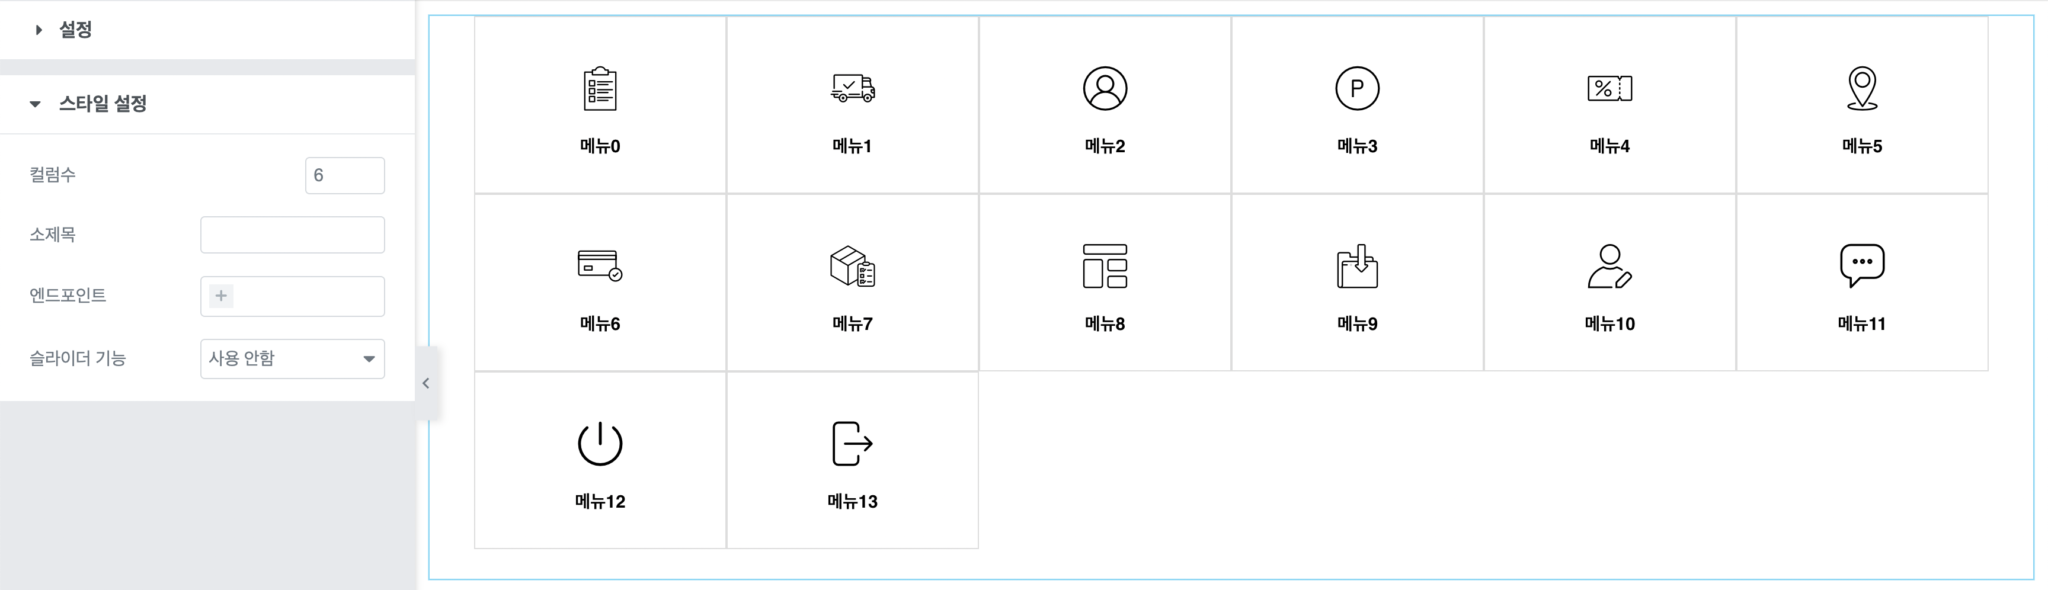 WooCommerce 韓国型 WordPress ショッピングモールに最適化されたエムショップ内アカウントプラグイン6